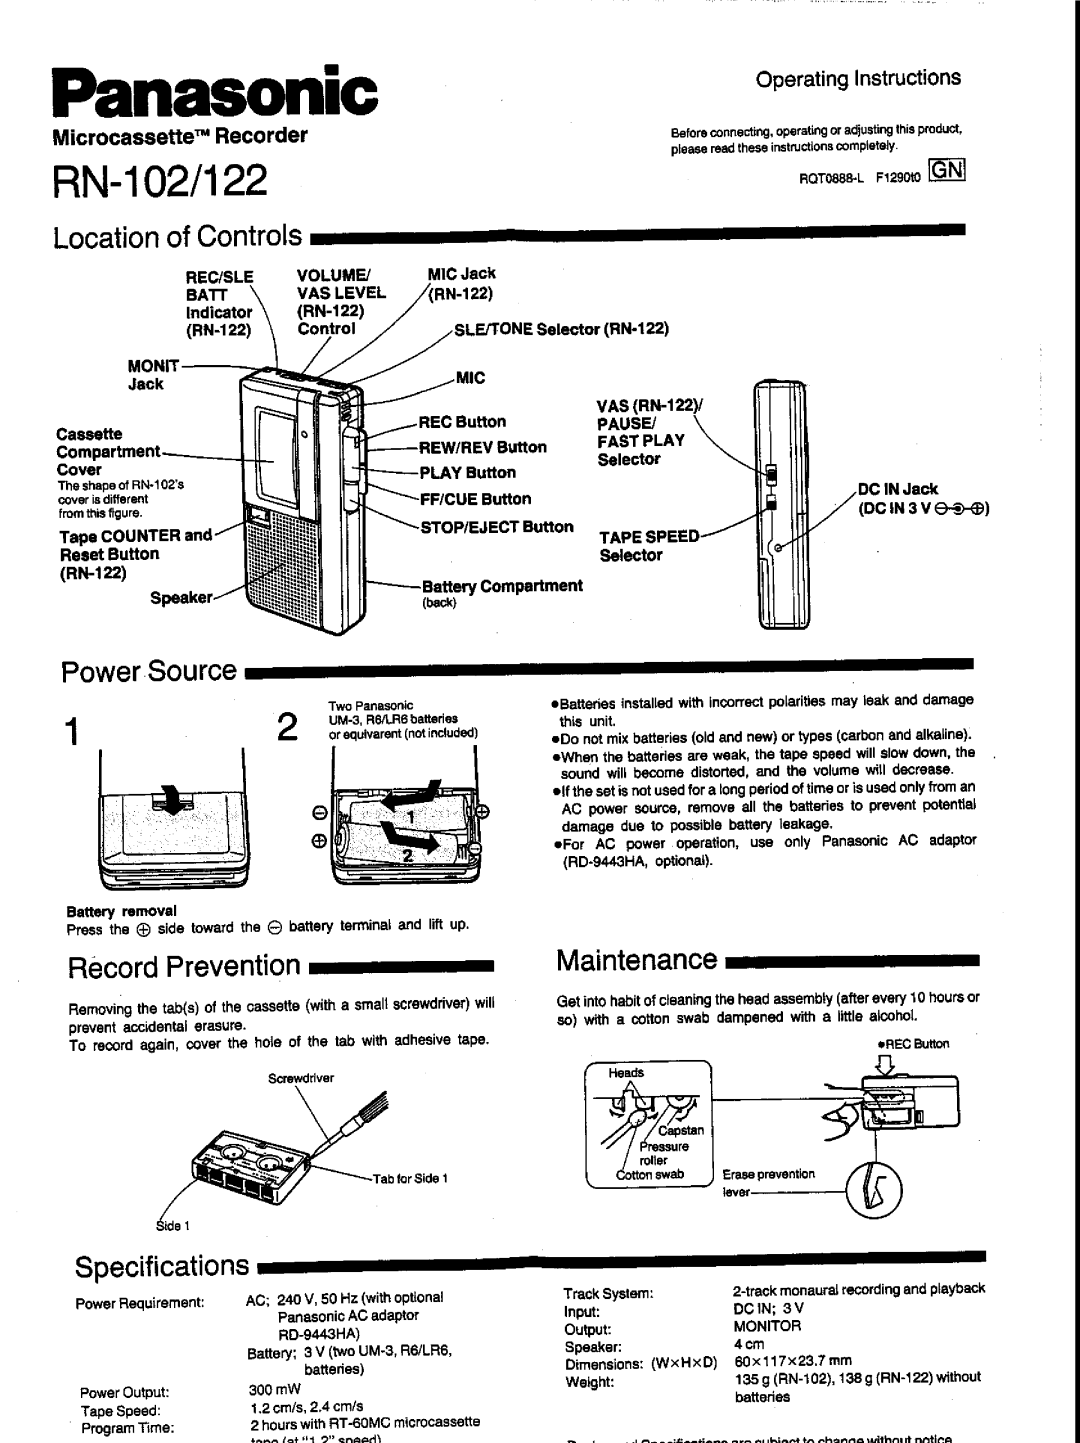 Panasonic RN-102, RN-122 manual 